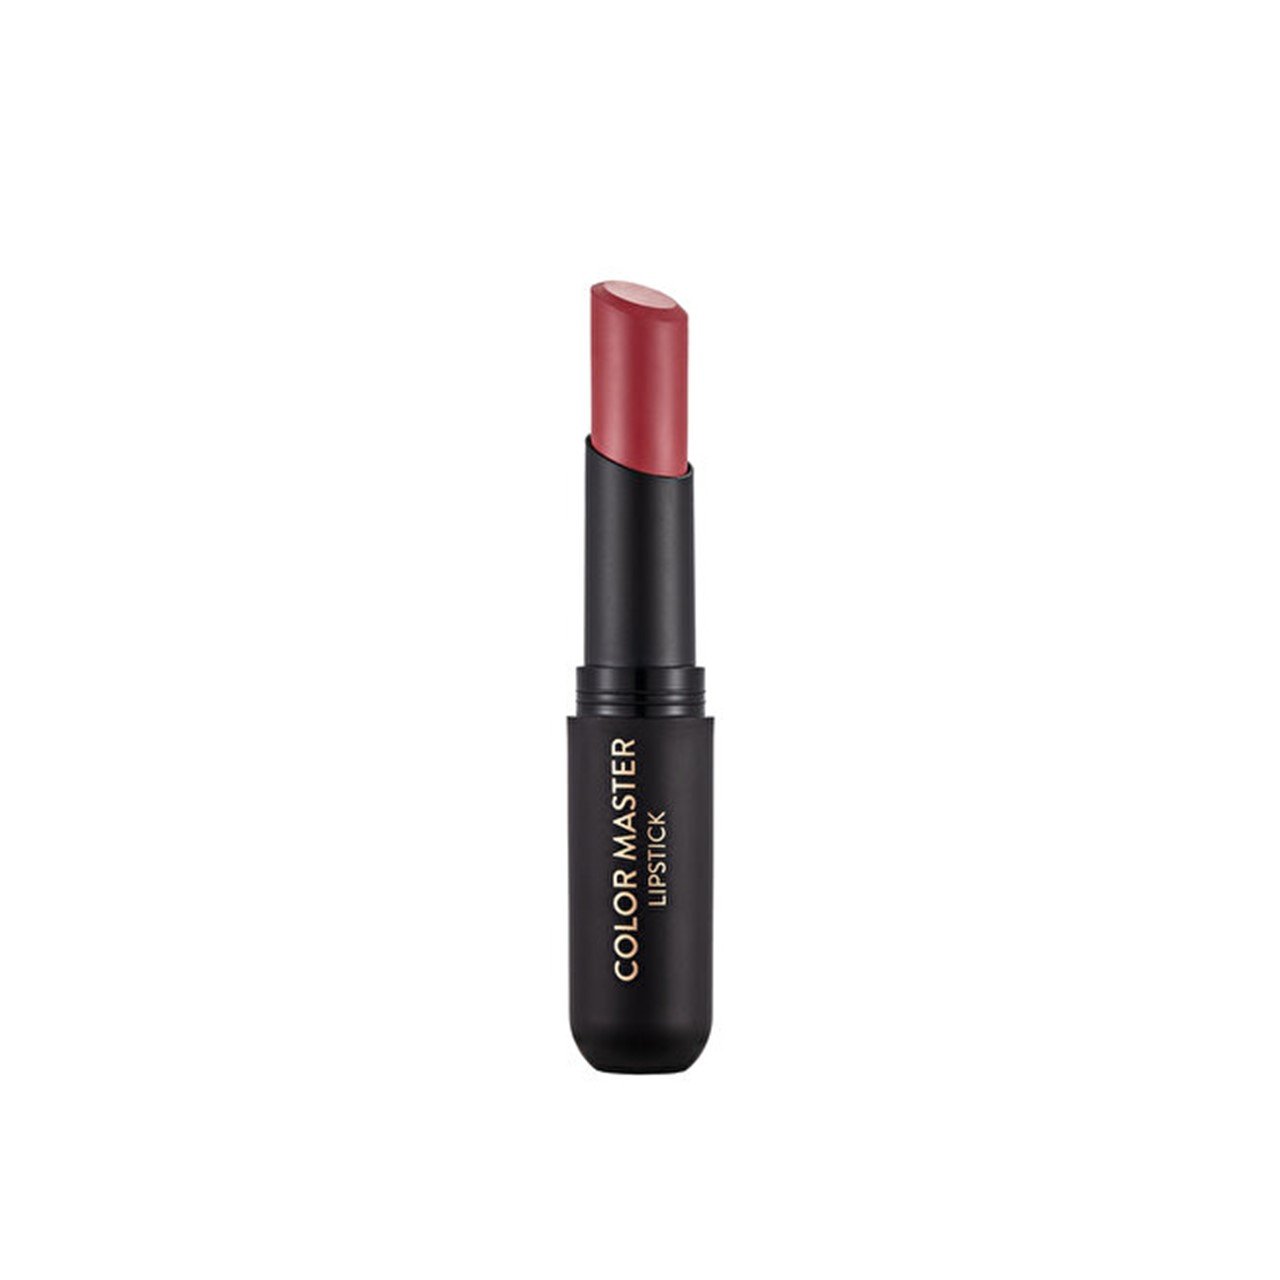 Flormar Color Master Lipstick 09 Kiss Me 3g (0.11oz)